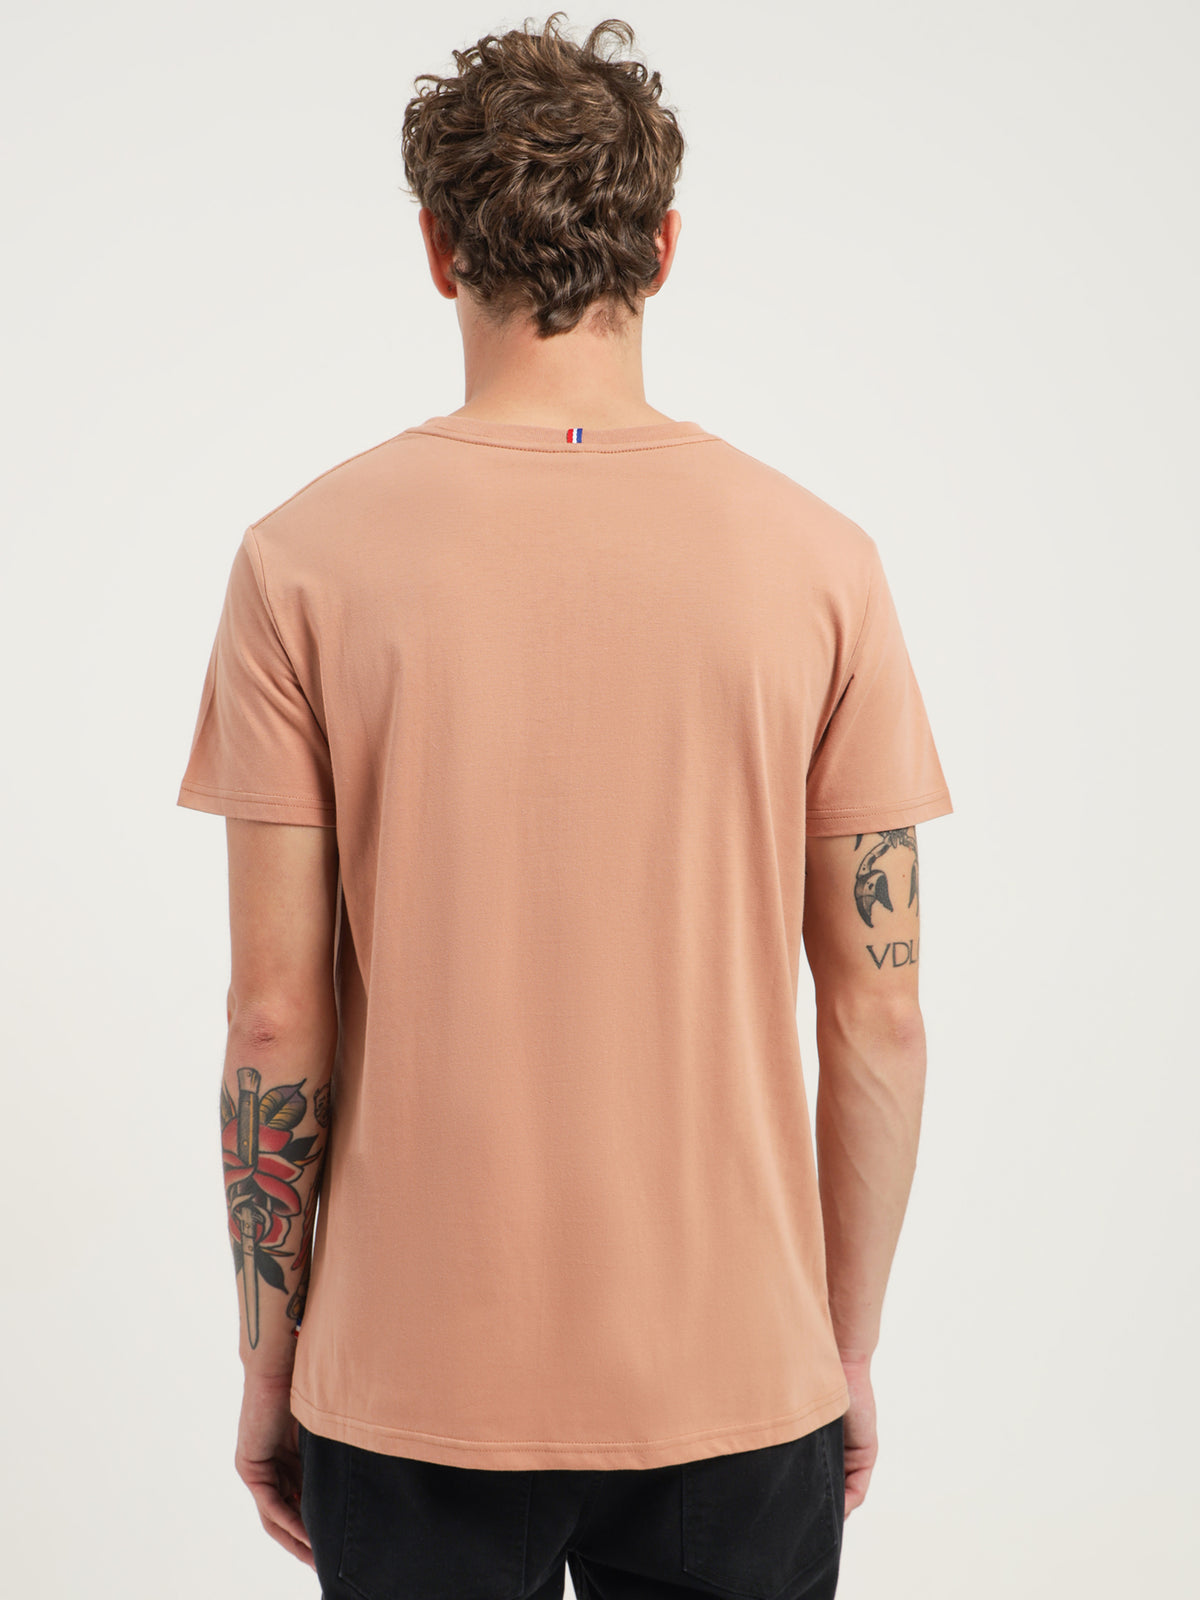 Essentiel Embroidered T-Shirt in Brown